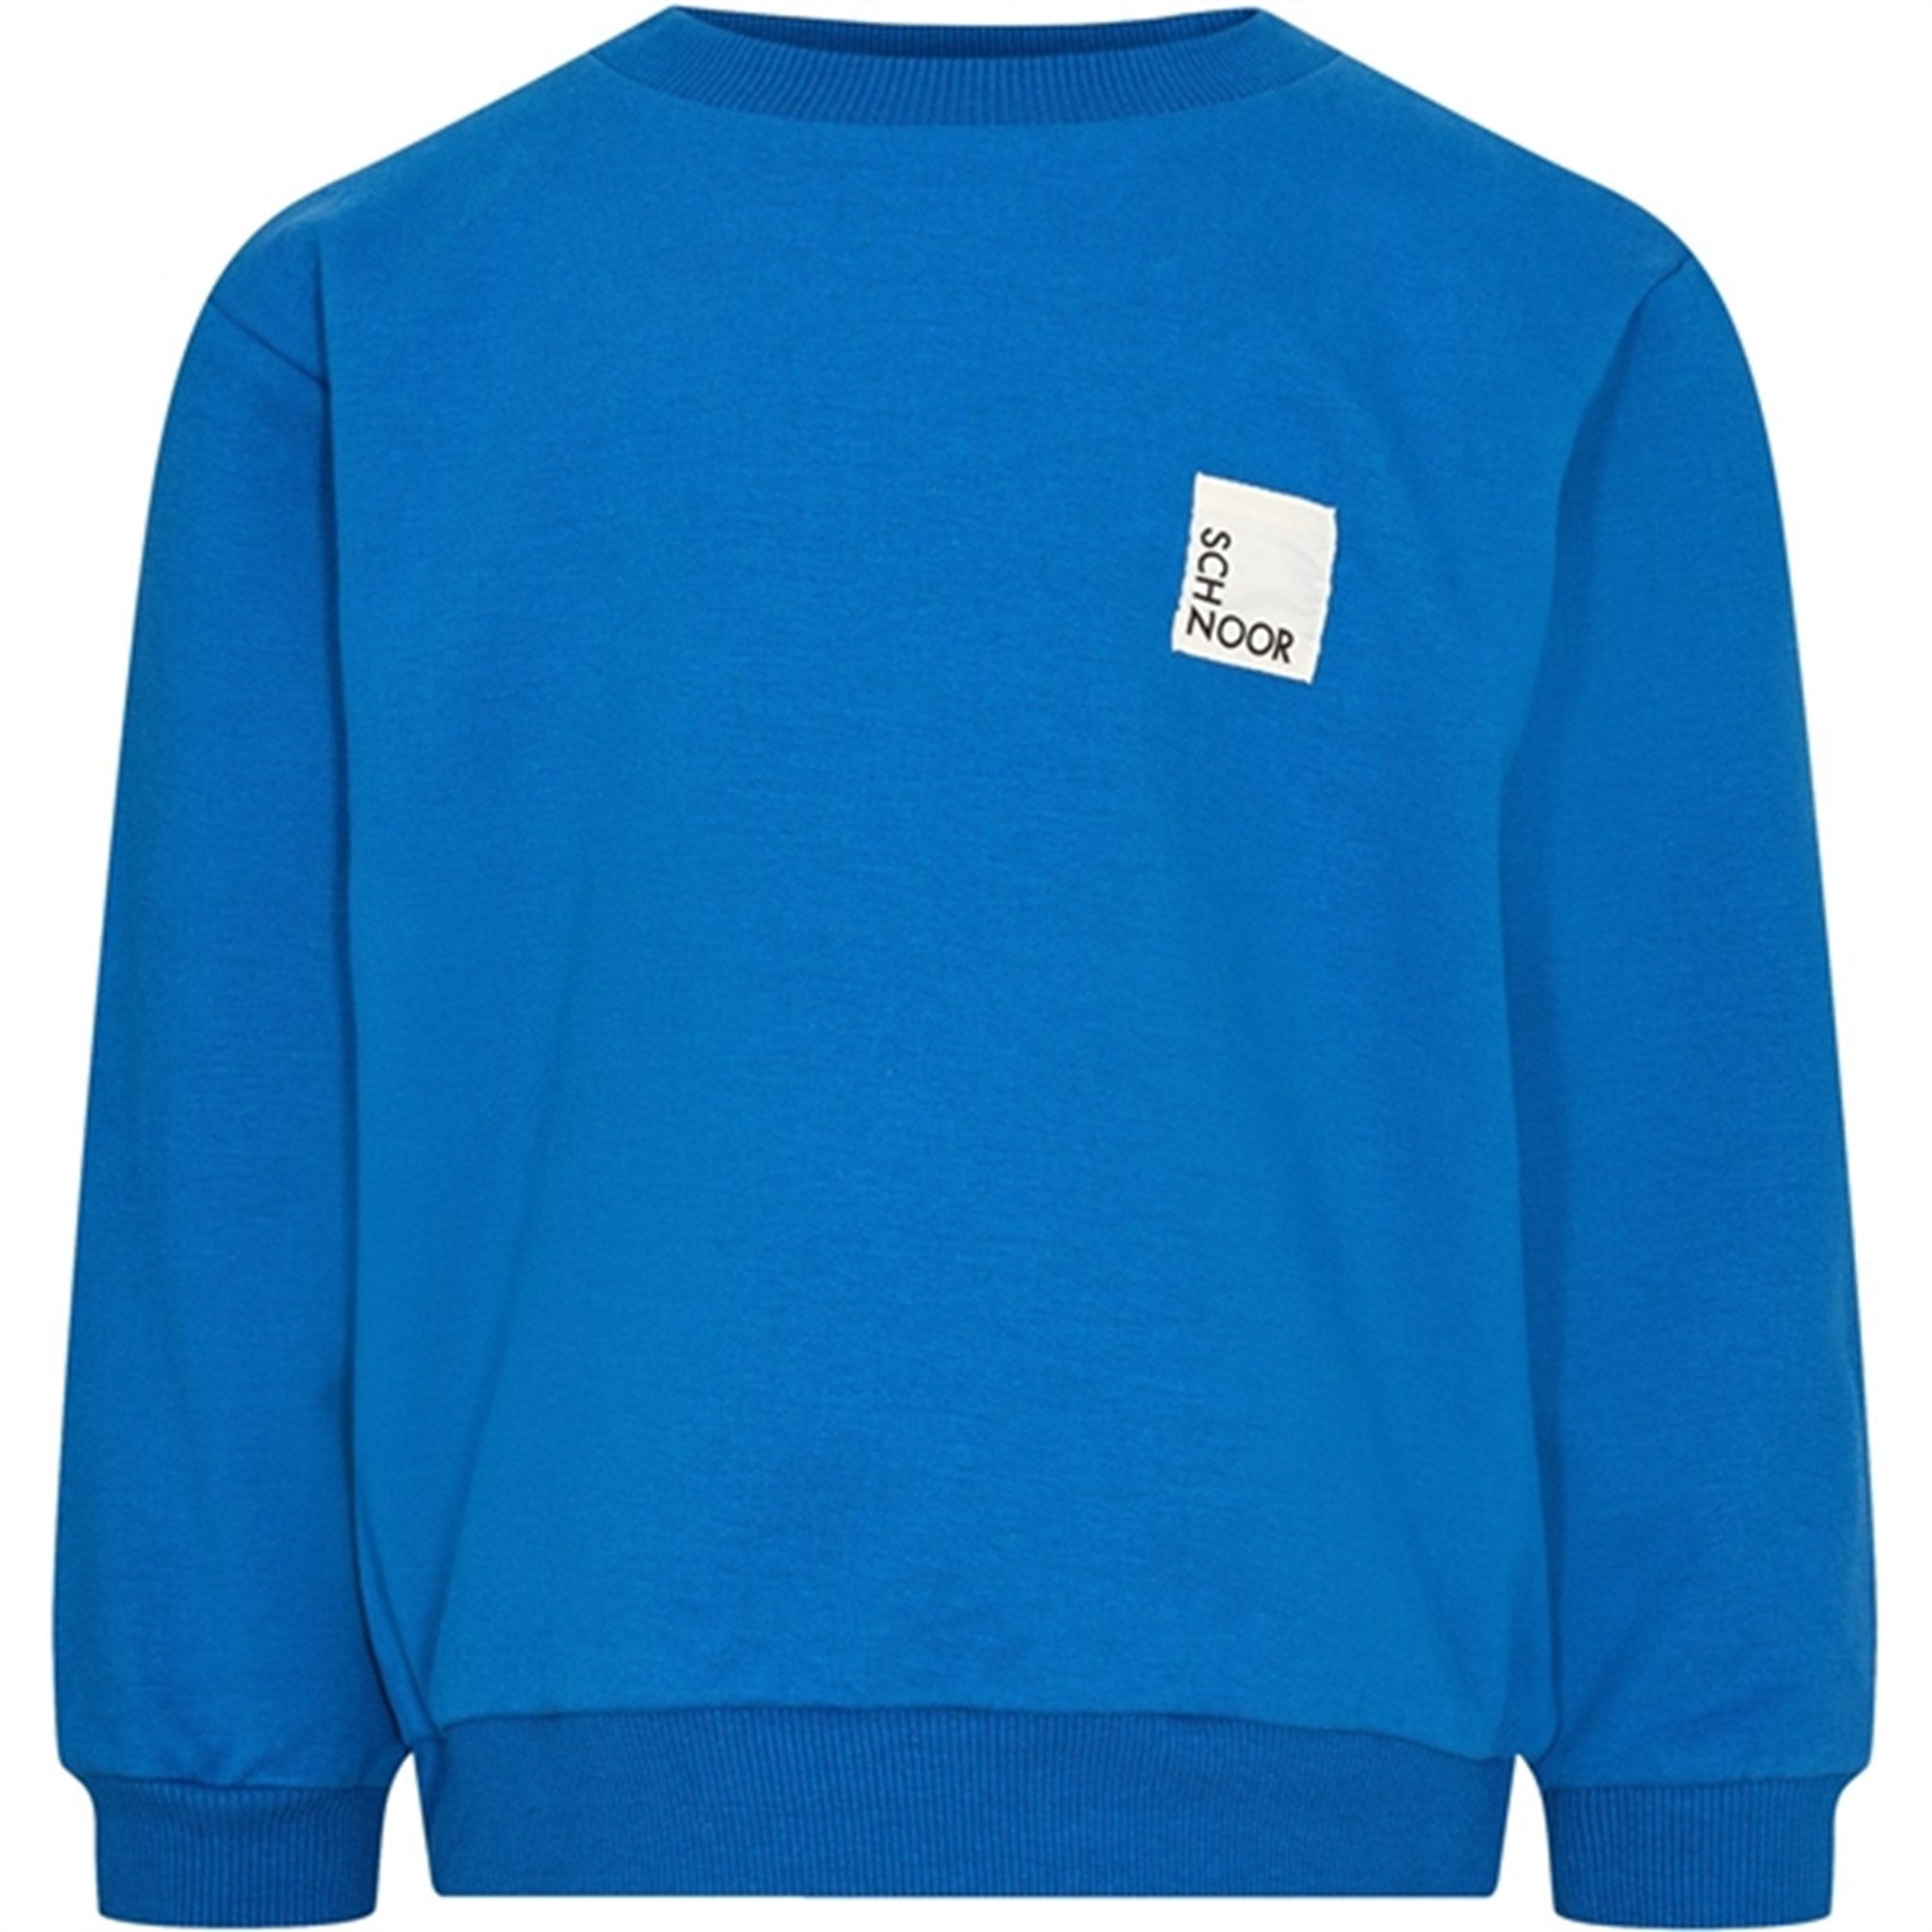 Sofie Schnoor Royal Blue Sweatshirt